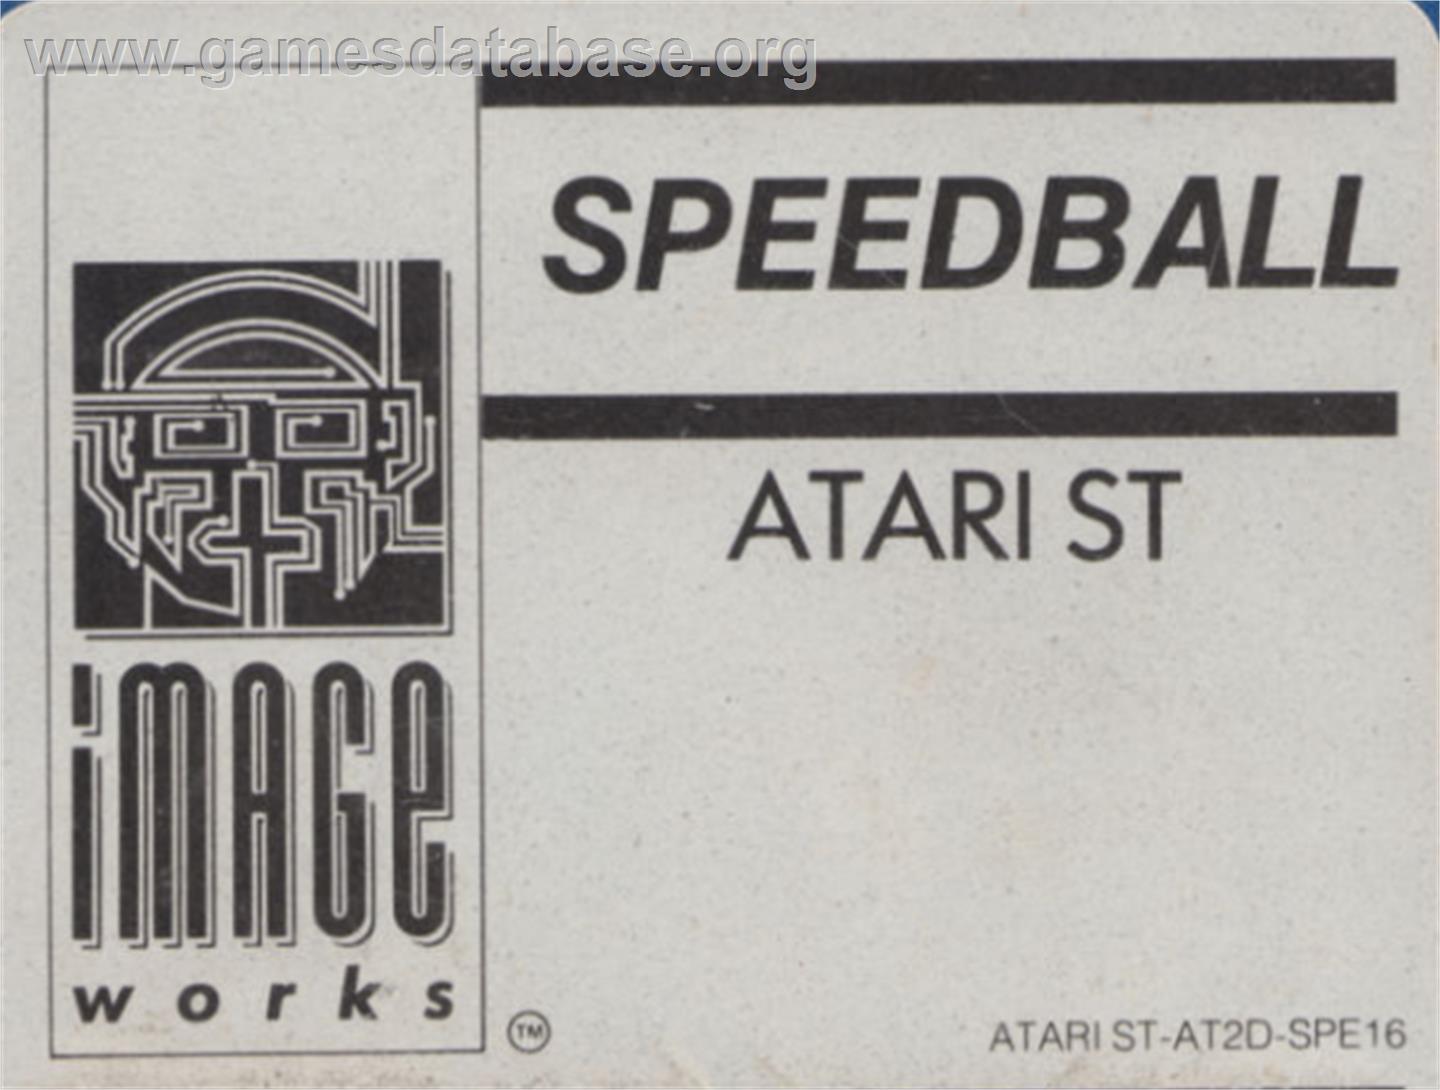 Speedball - Atari ST - Artwork - Cartridge Top